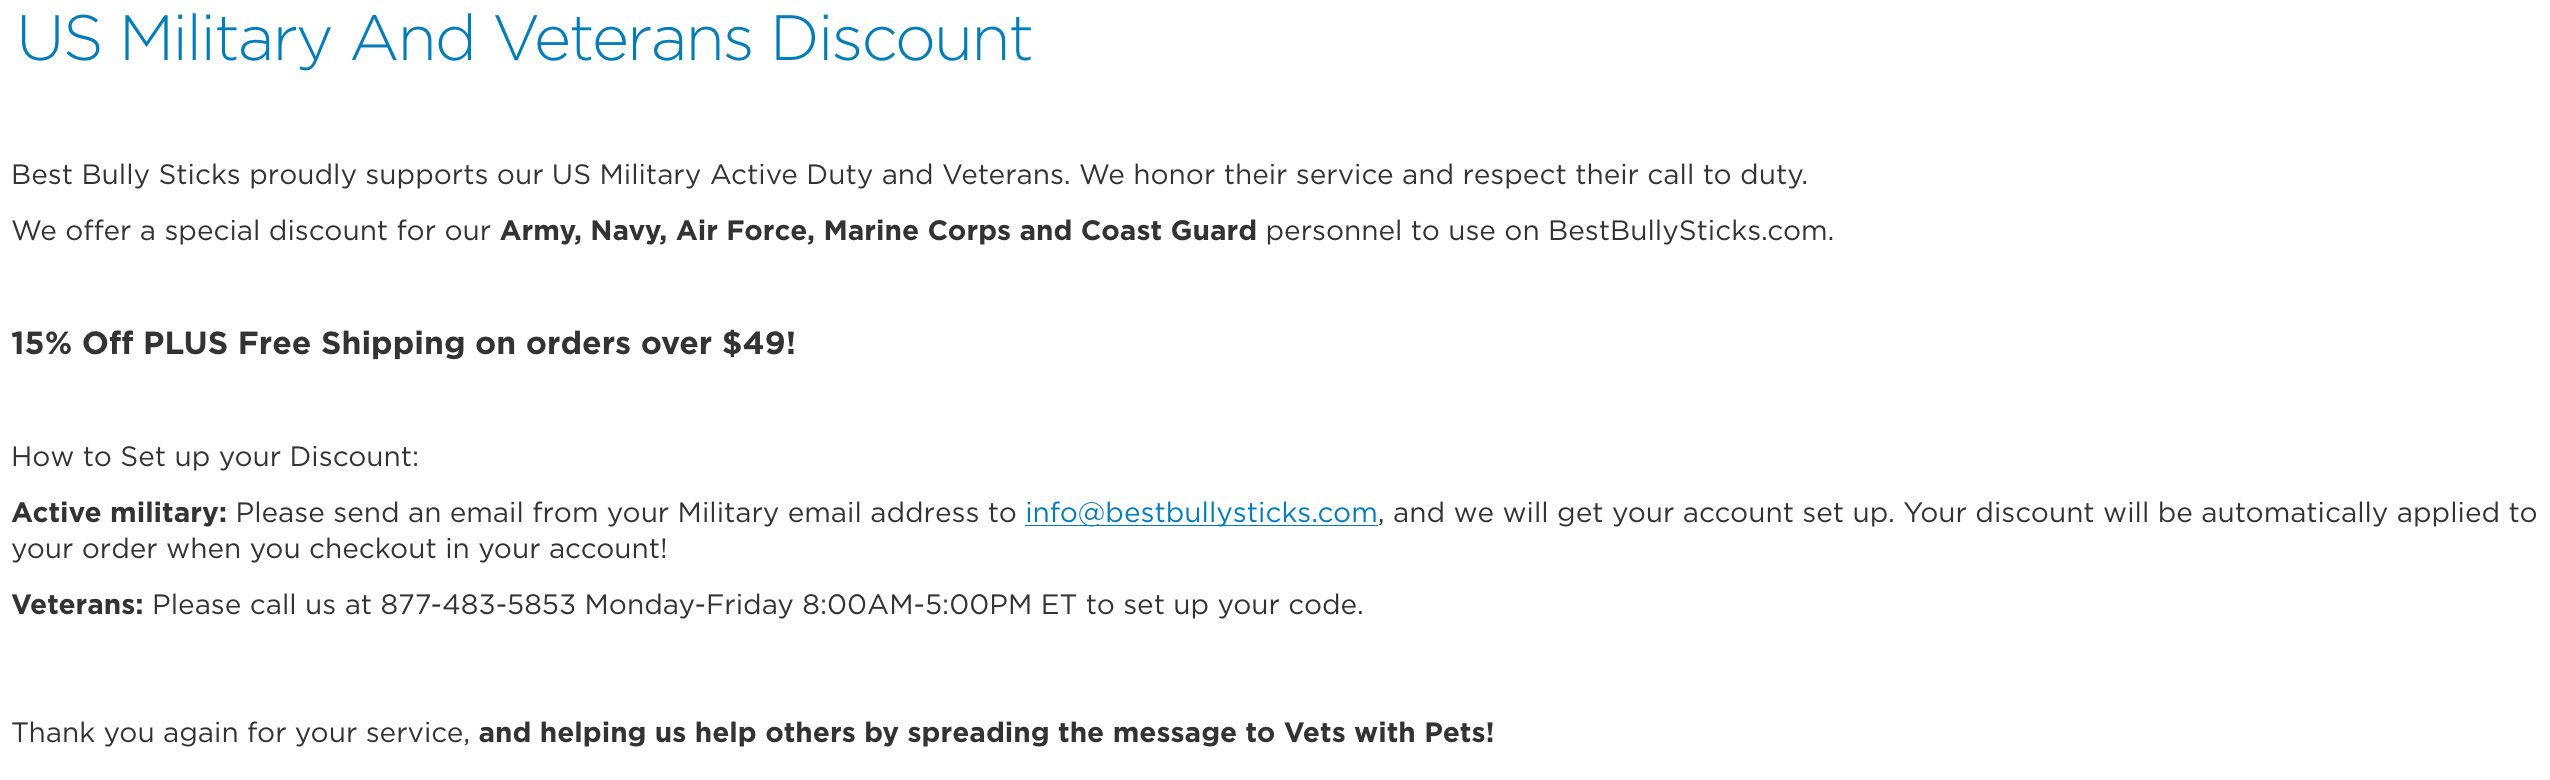 Best Bully Sticks Military Veteran Discounts